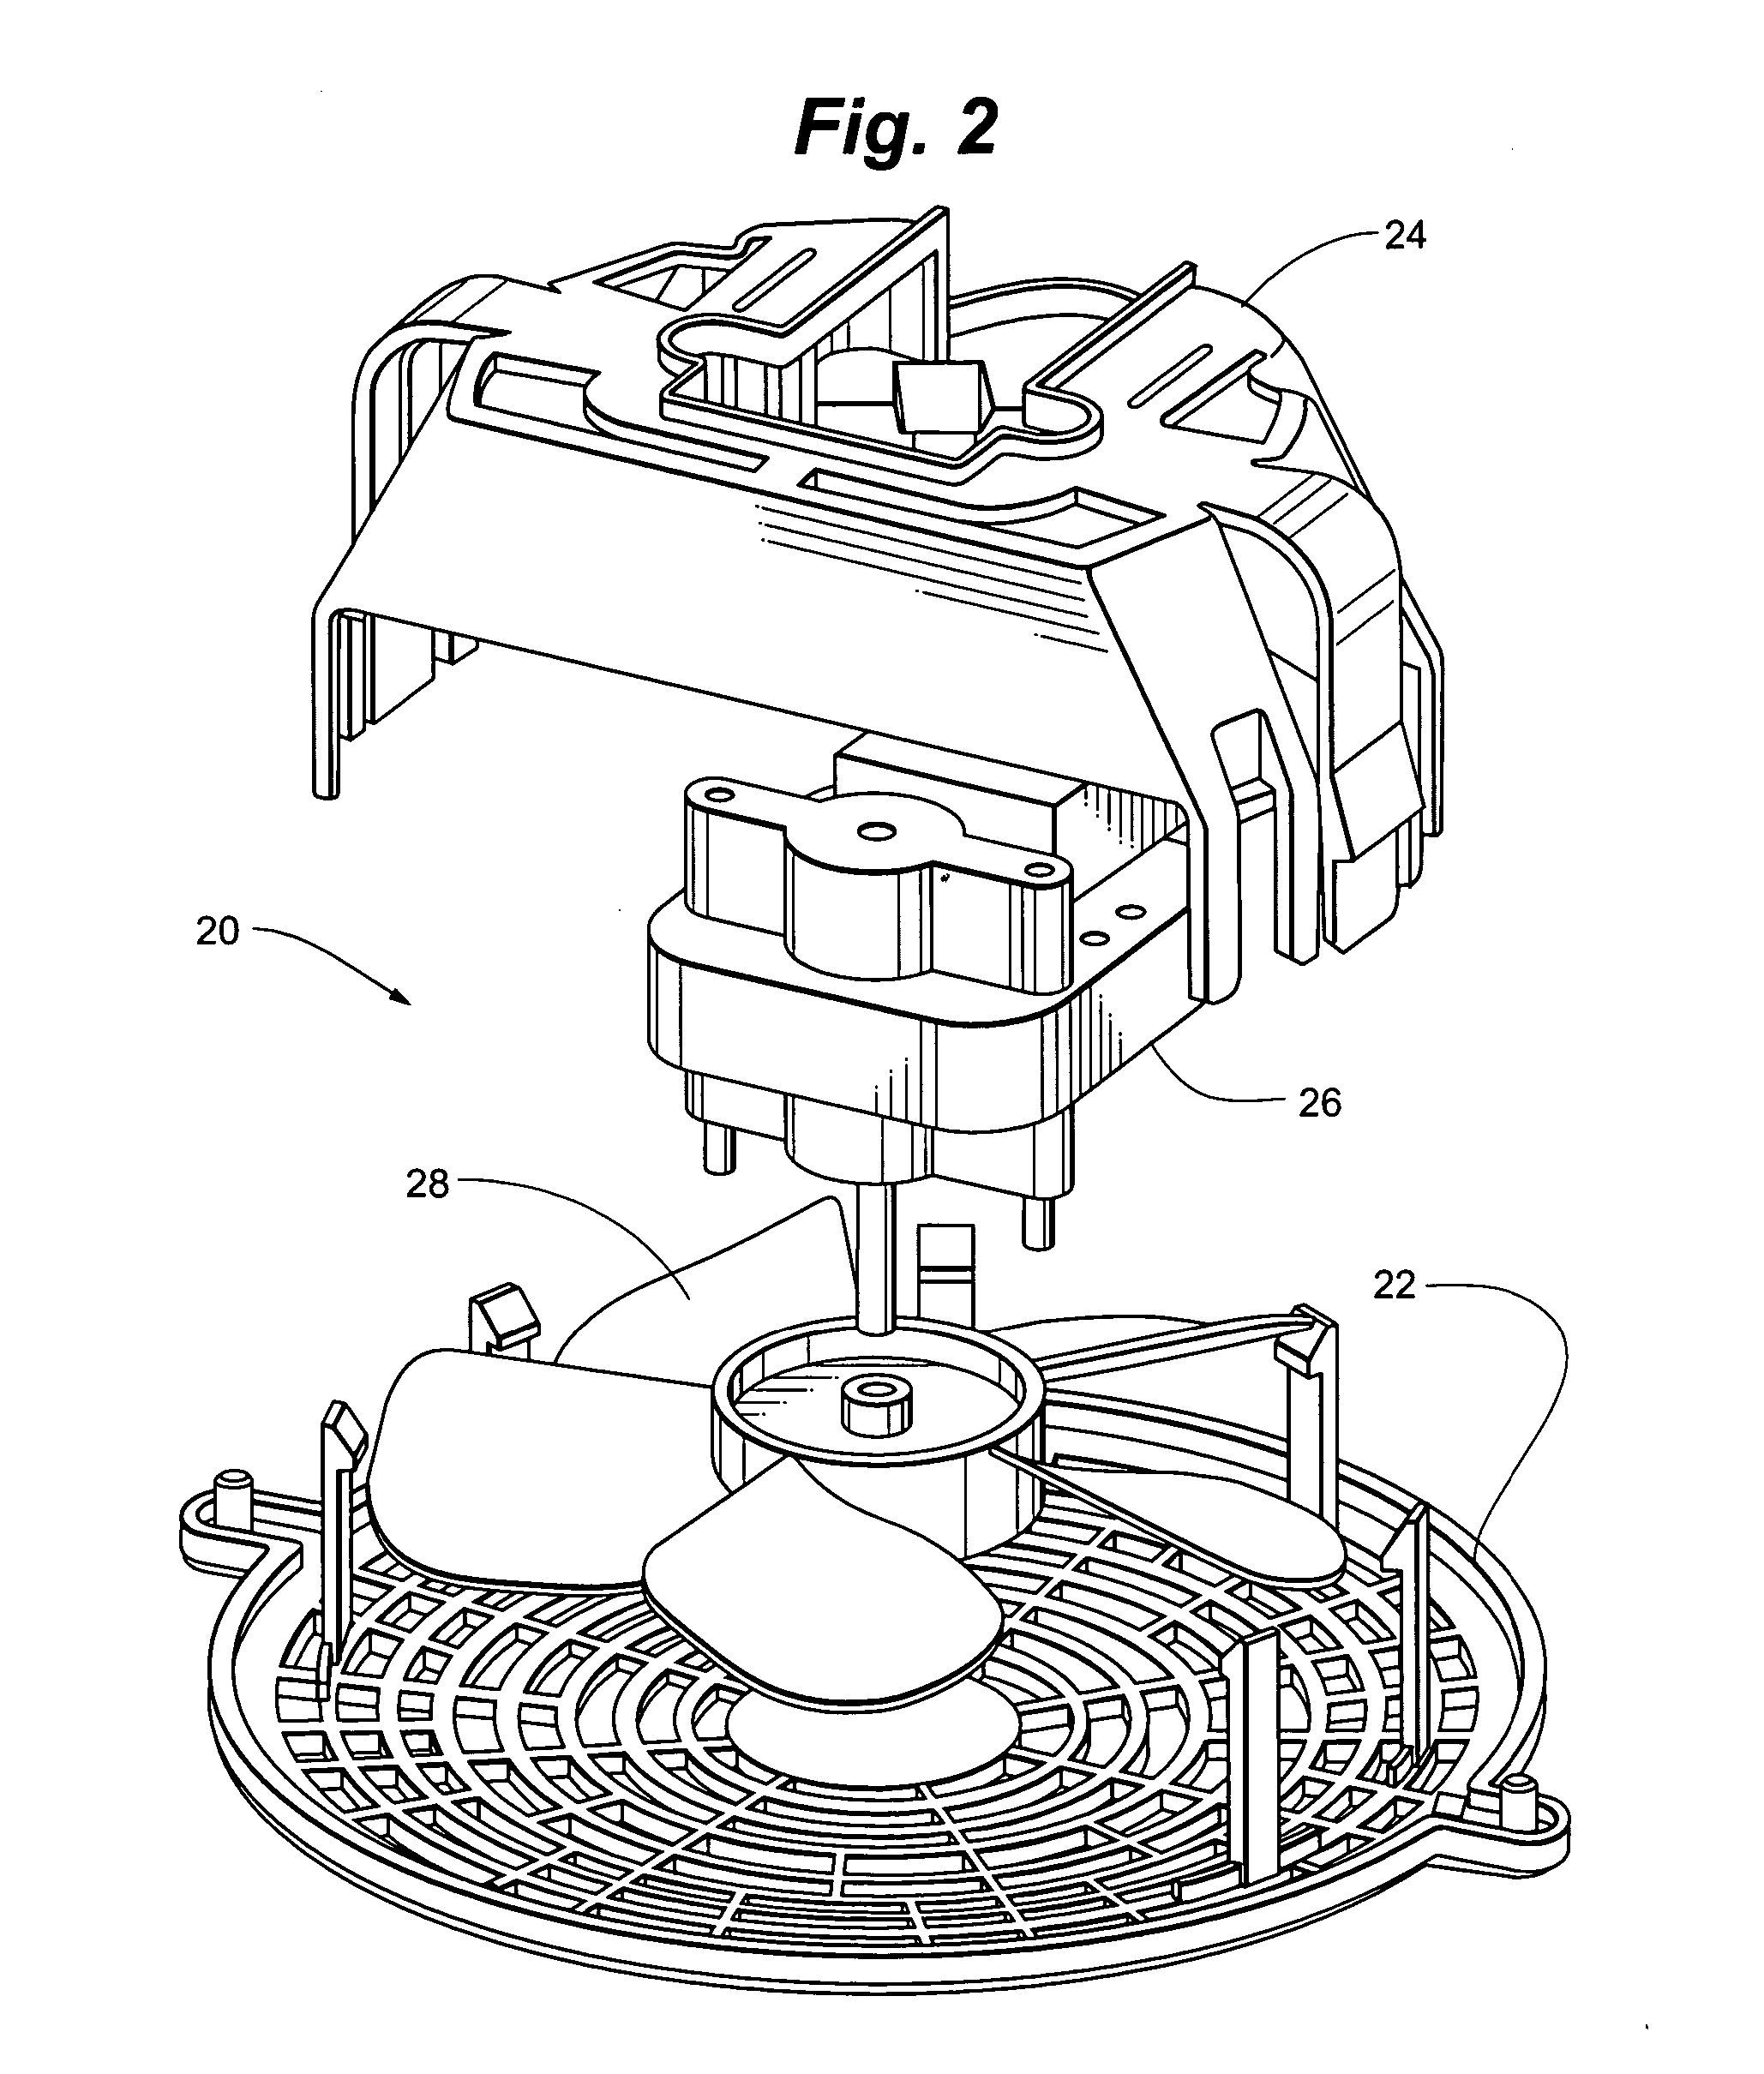 Unitary fan-motor grill assembly